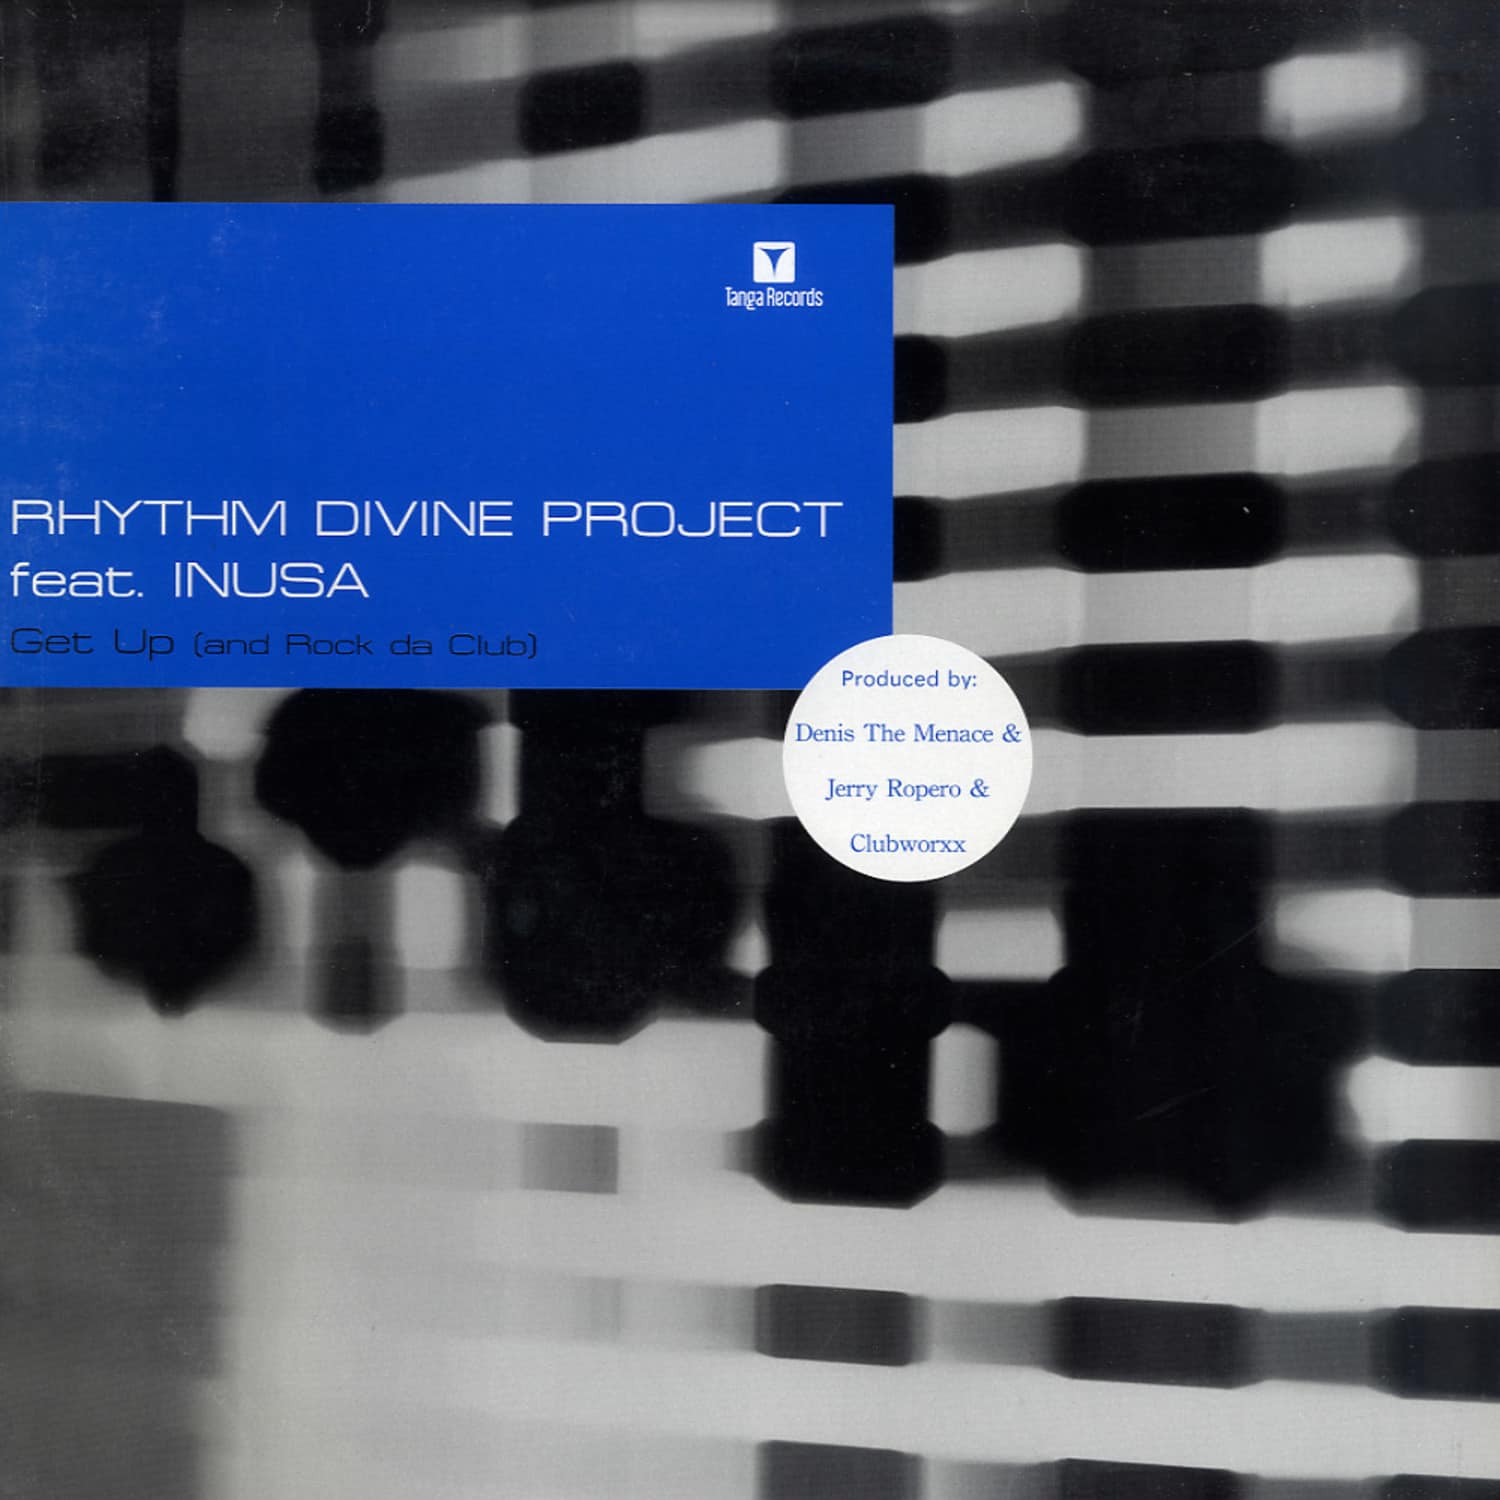 Rhythm Divine Project feat Inusa - GET UP 